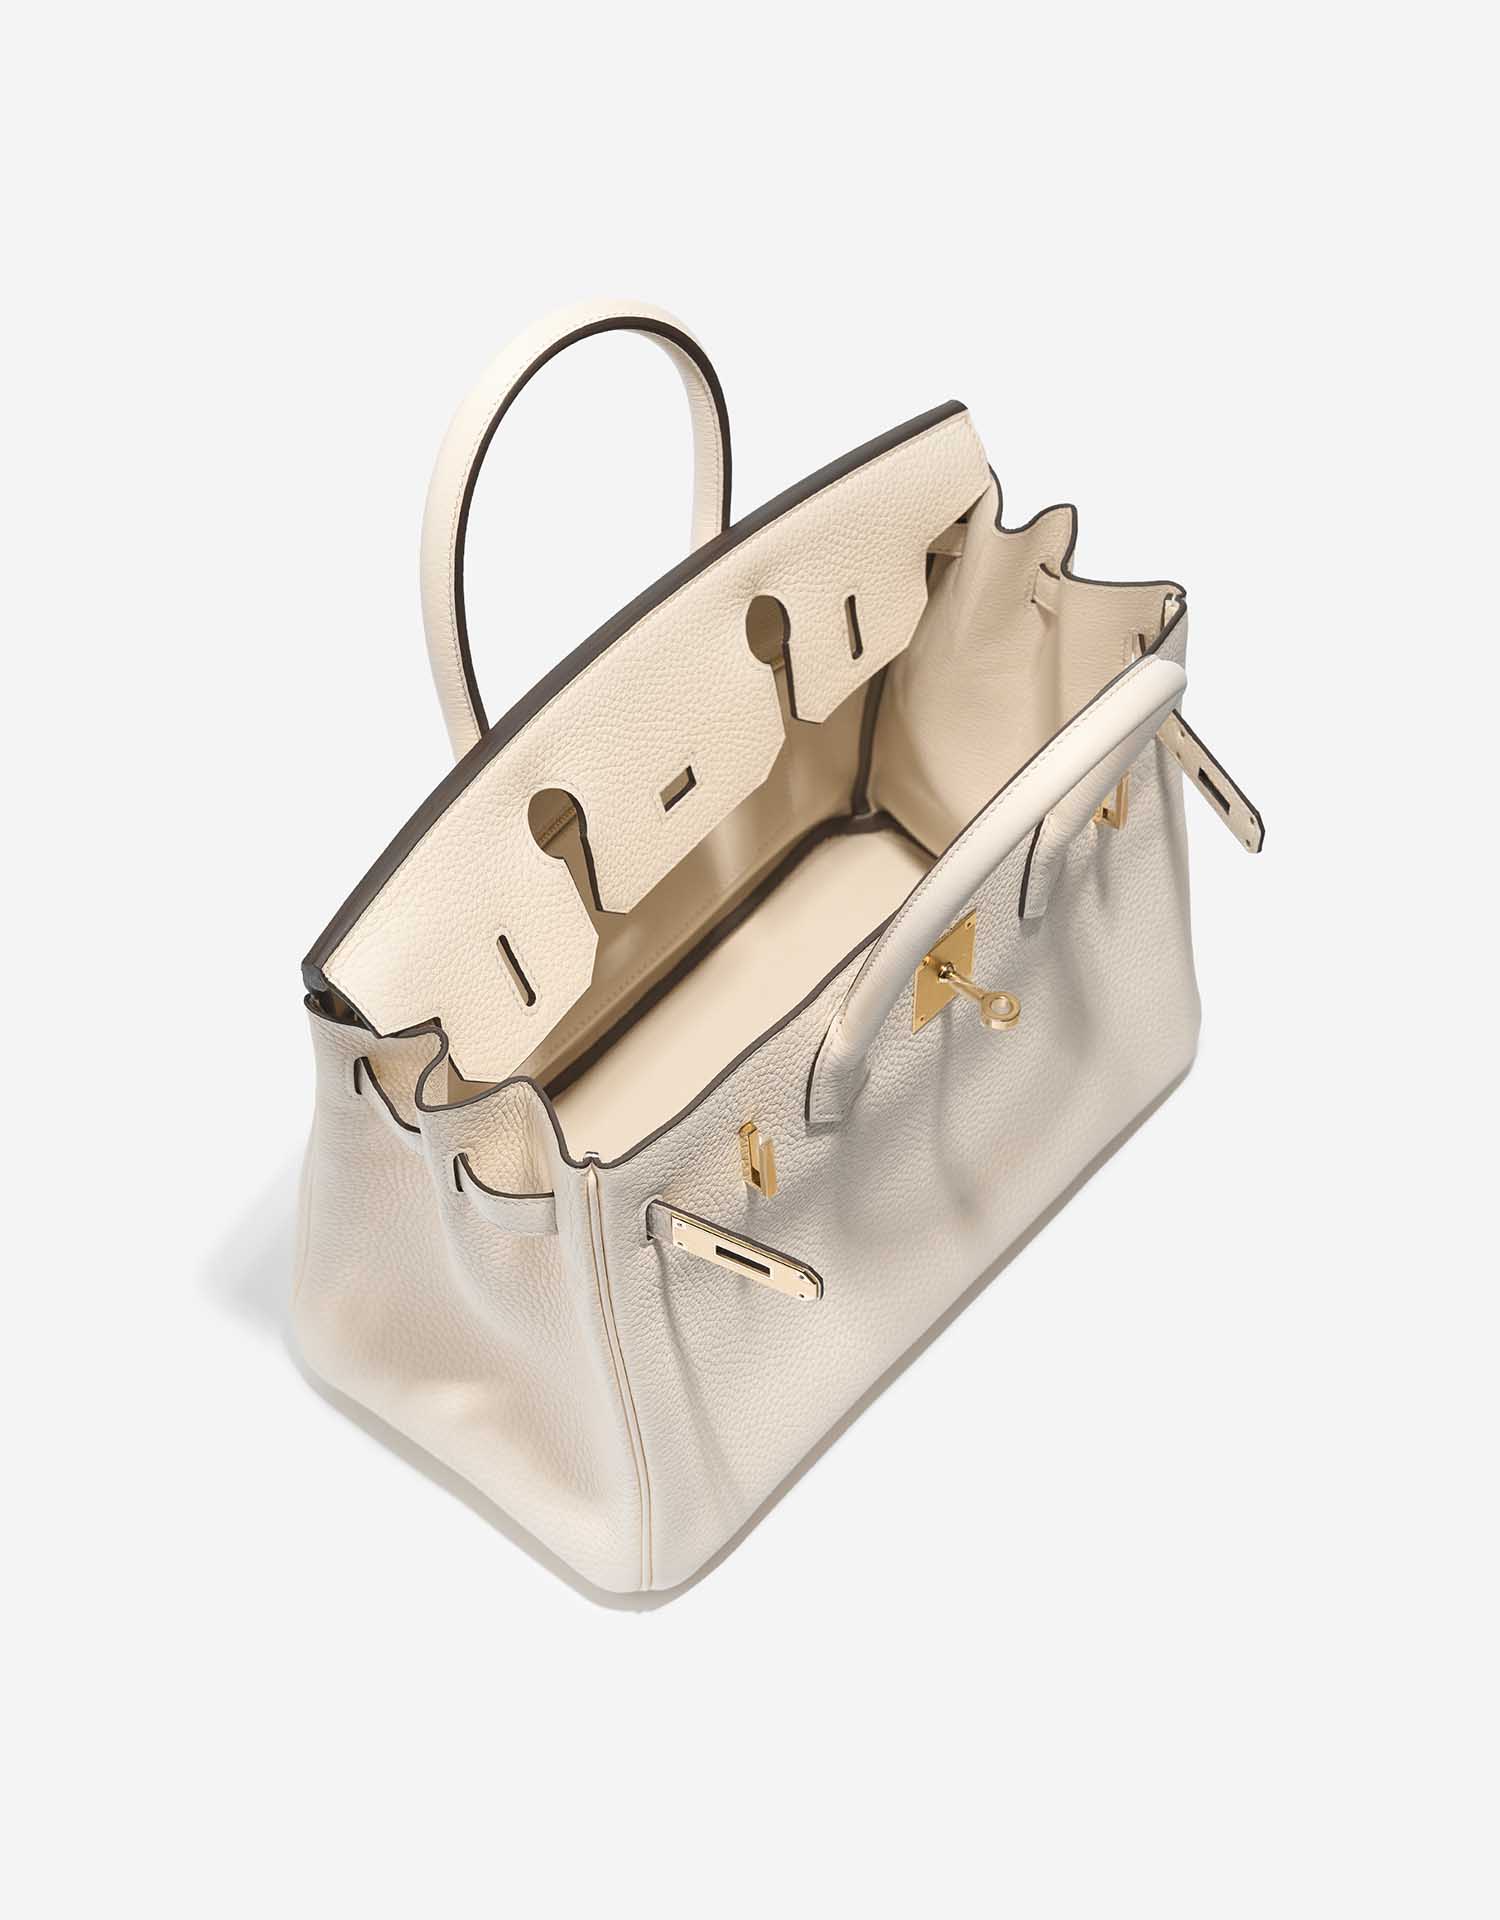 Pre-owned Hermès bag Birkin 30 Taurillon Clemence Nata White Inside | Sell your designer bag on Saclab.com